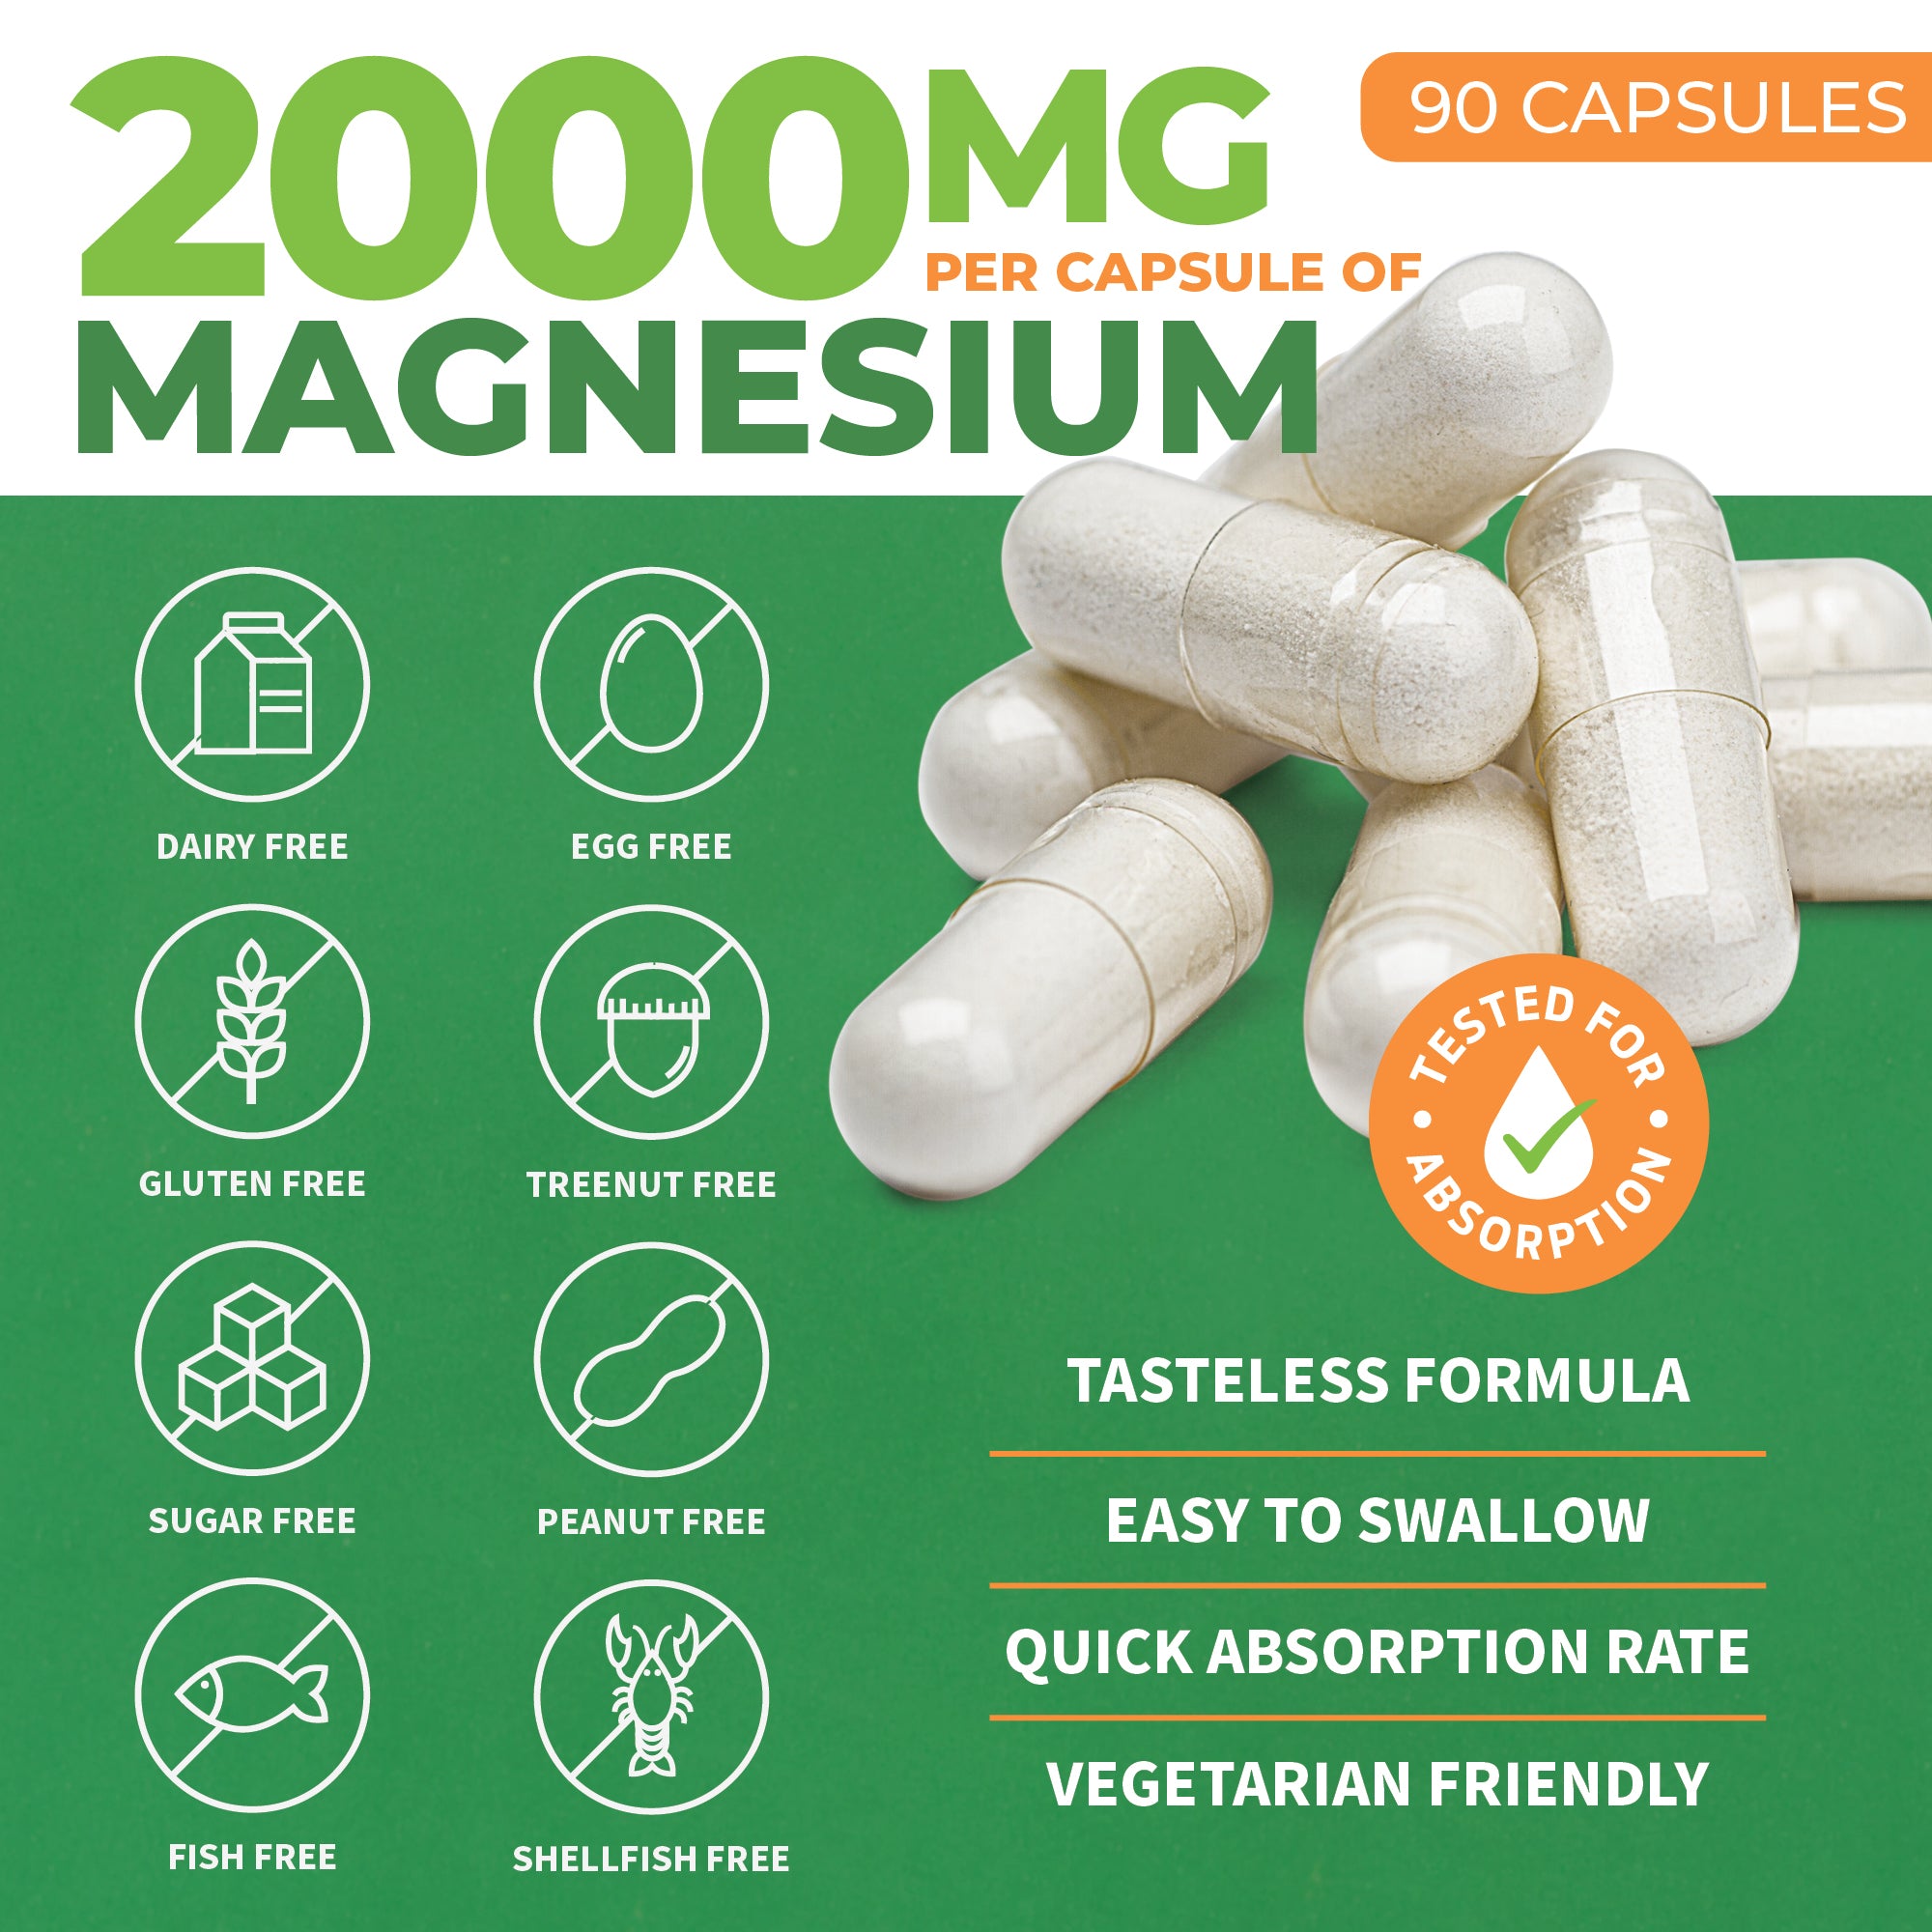 Magnesium Threonate 